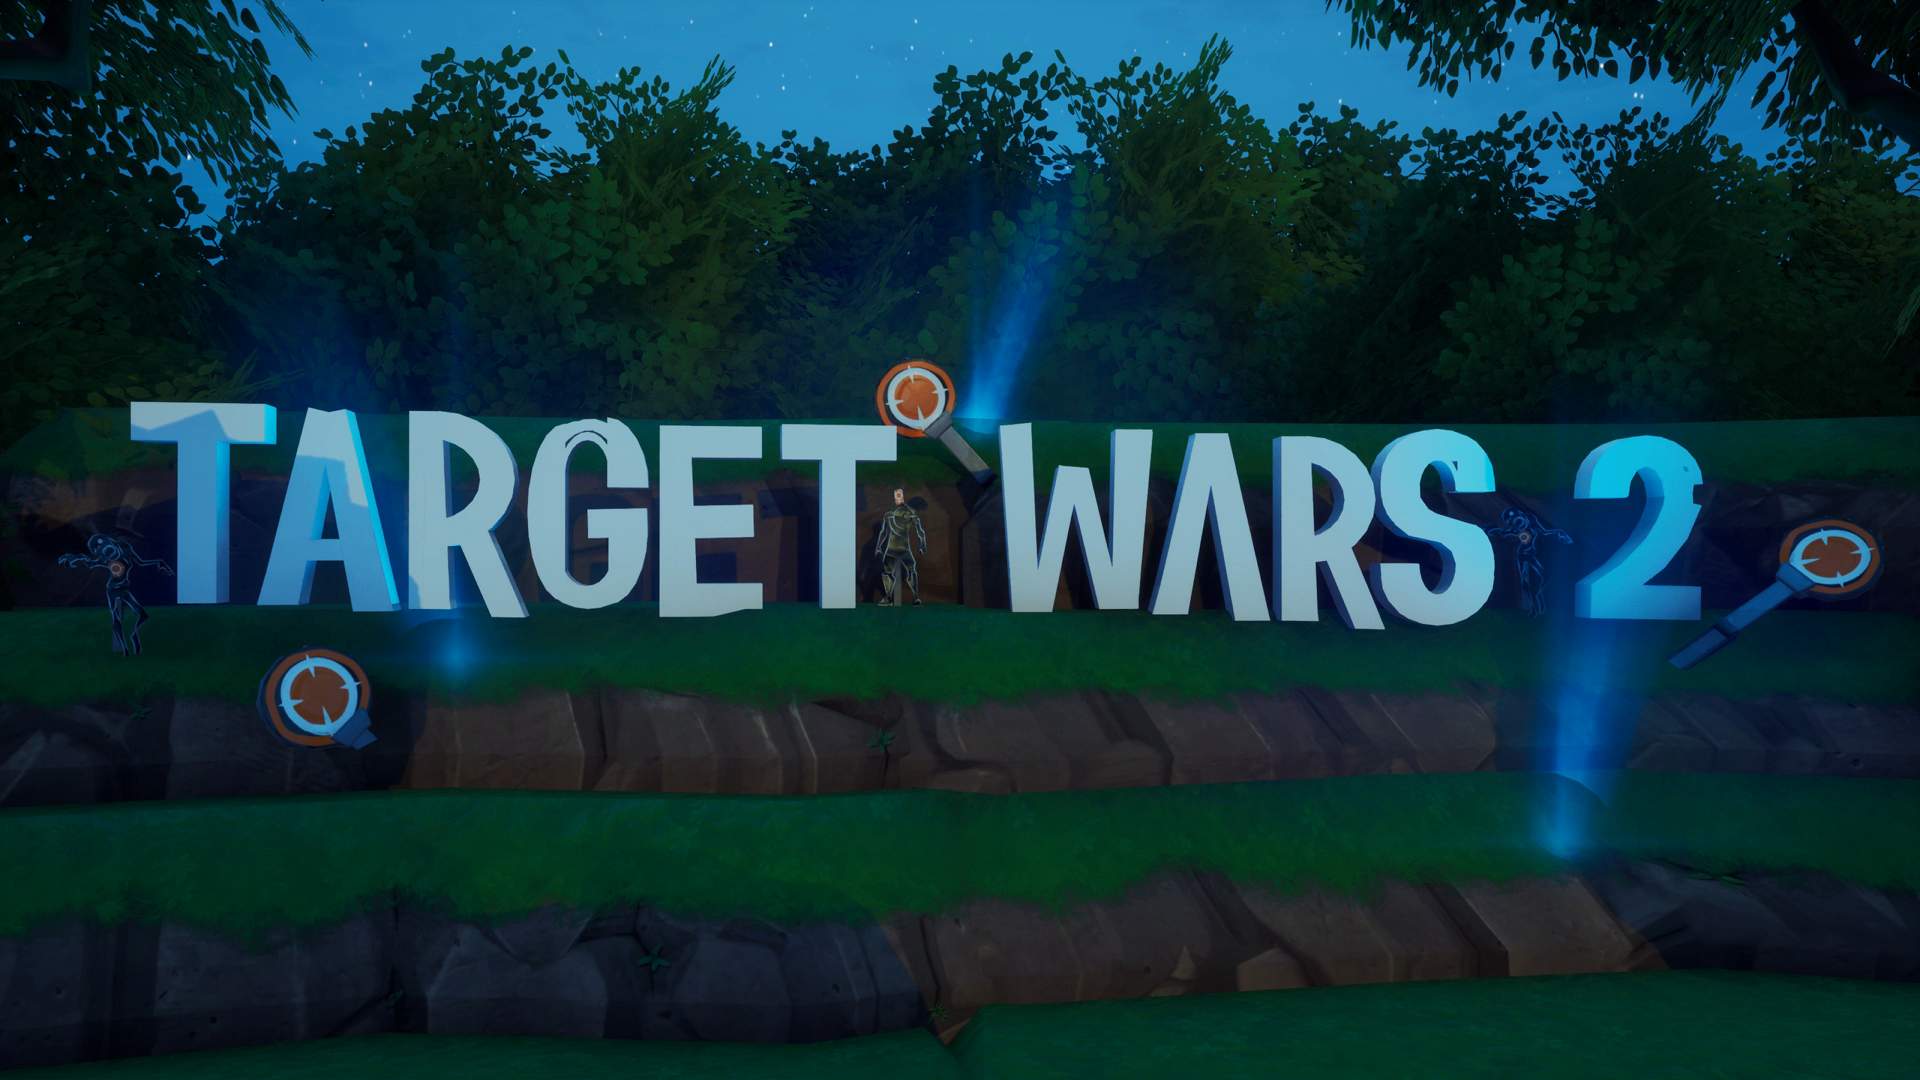 TARGET WARS 2 - AIM TRAINER!